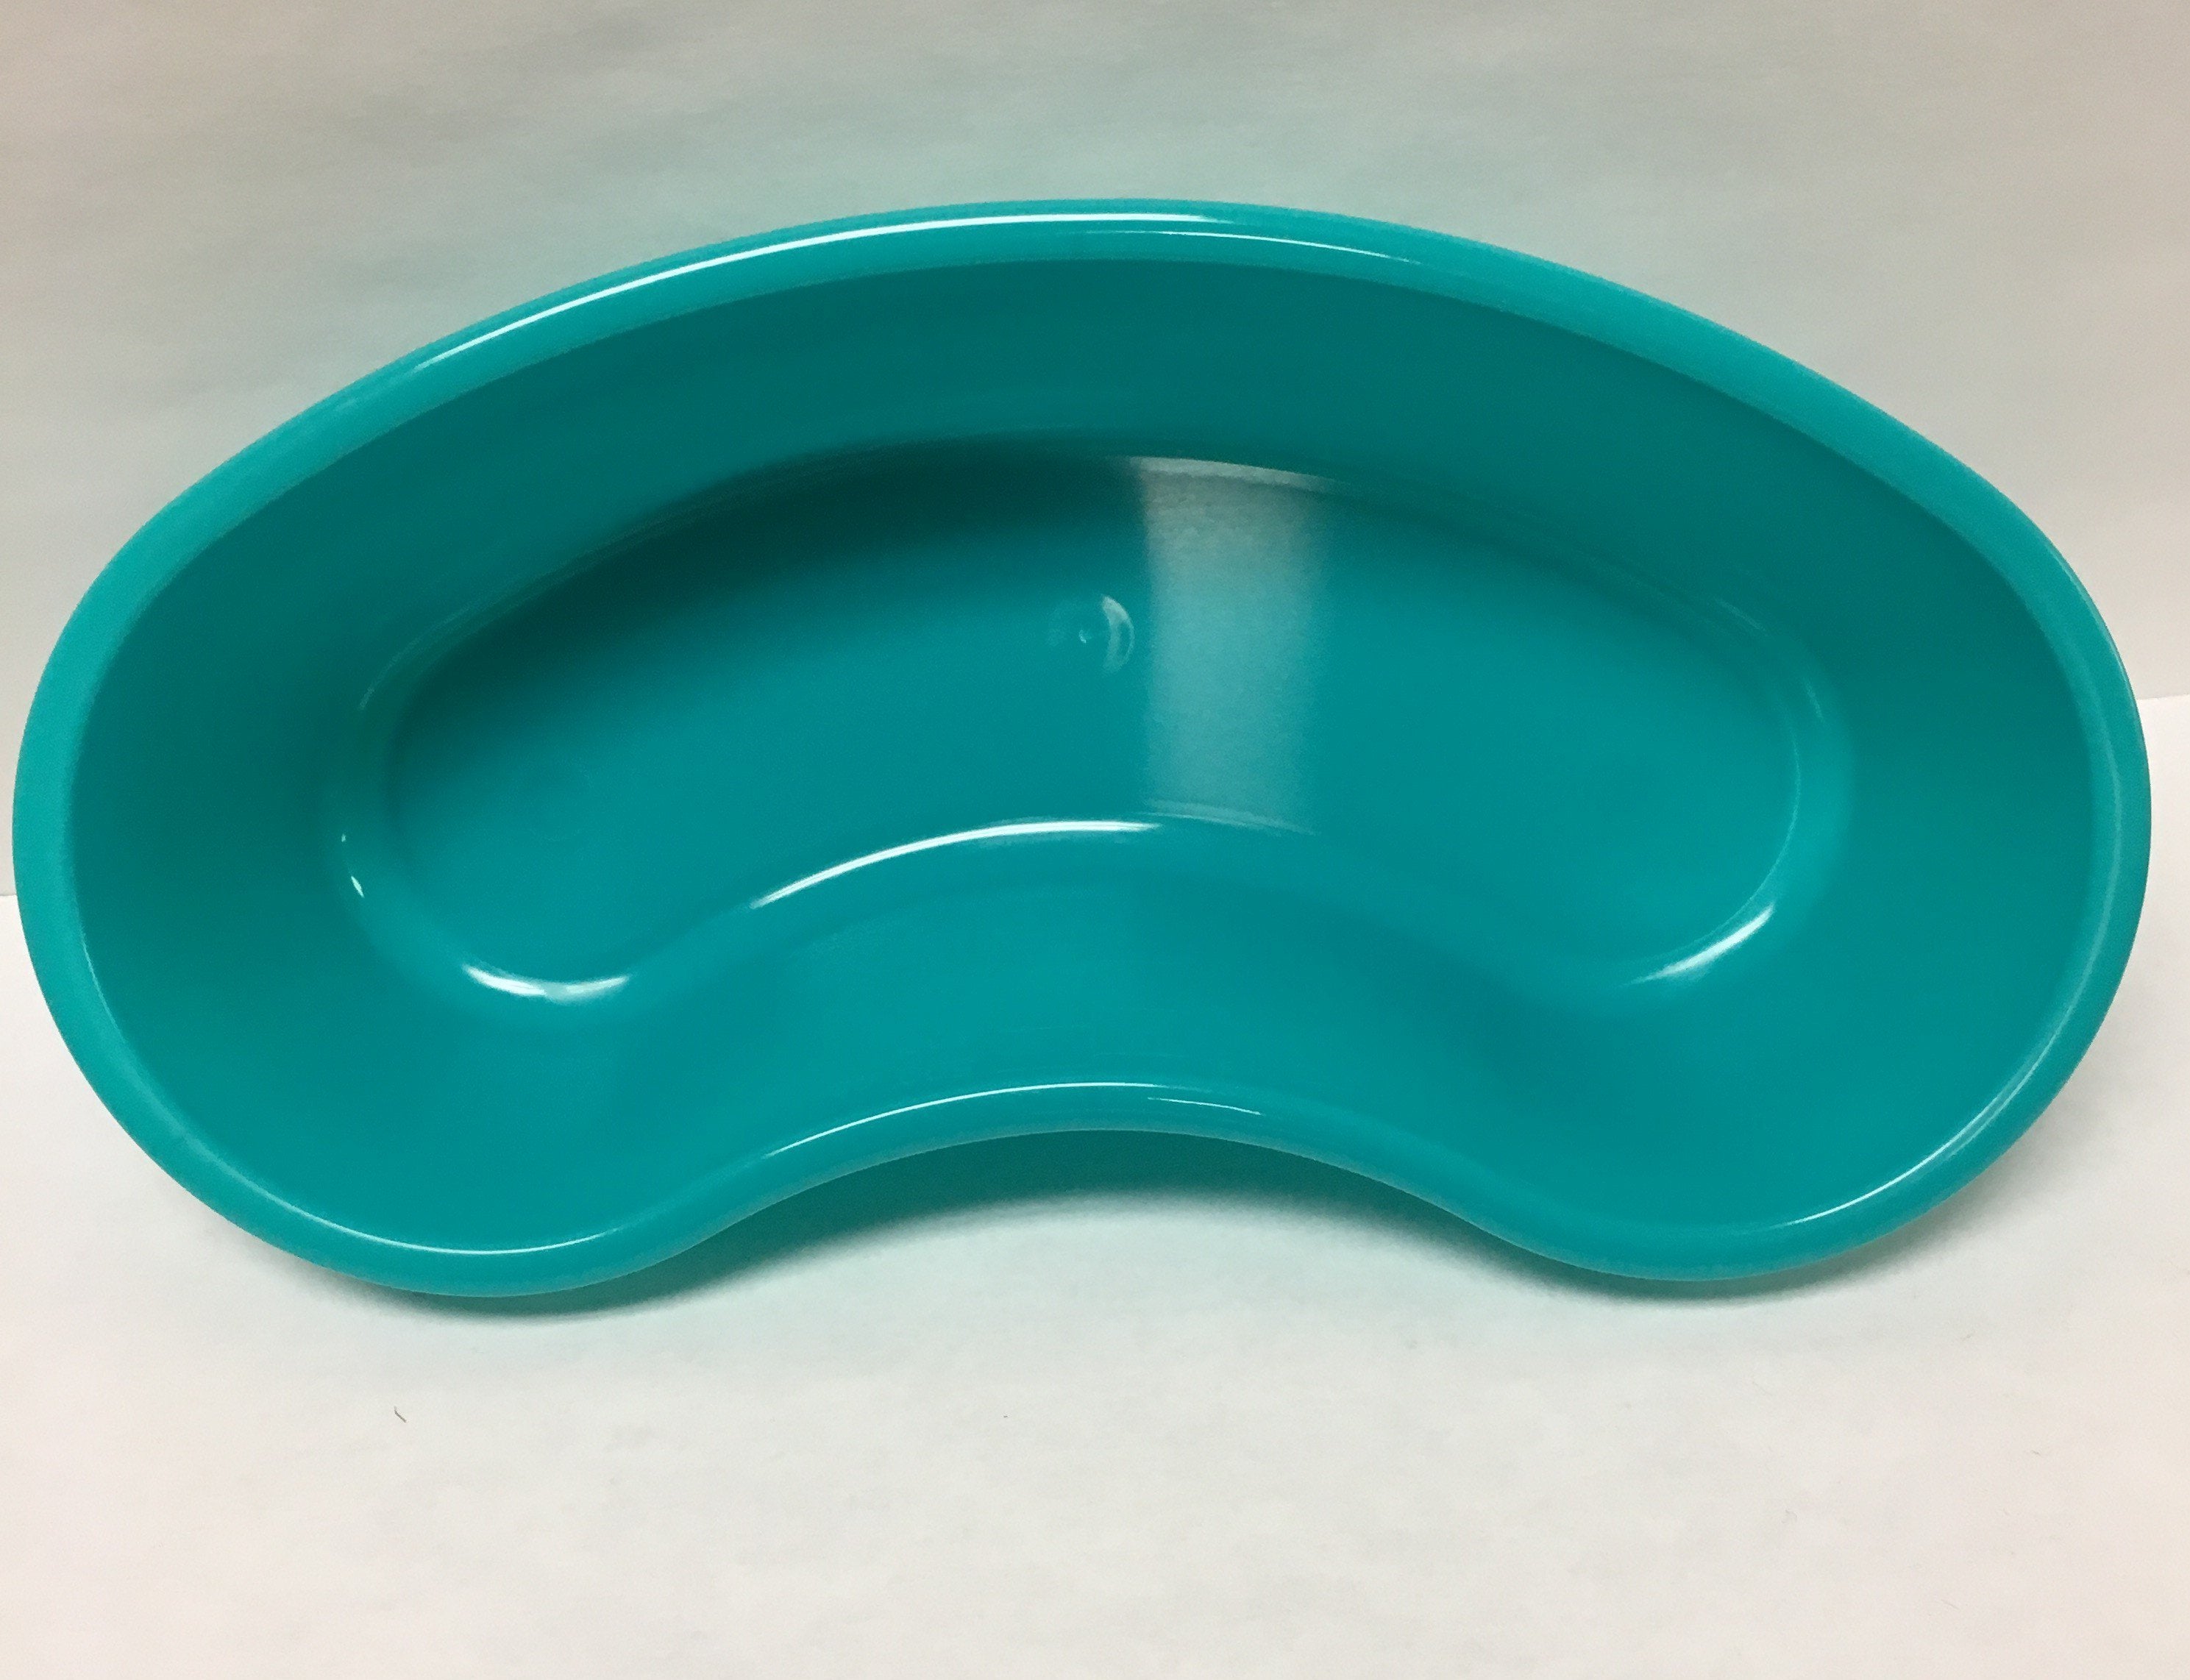 Emesis Basin Turquoise 500 cc Plastic Single Patient Use